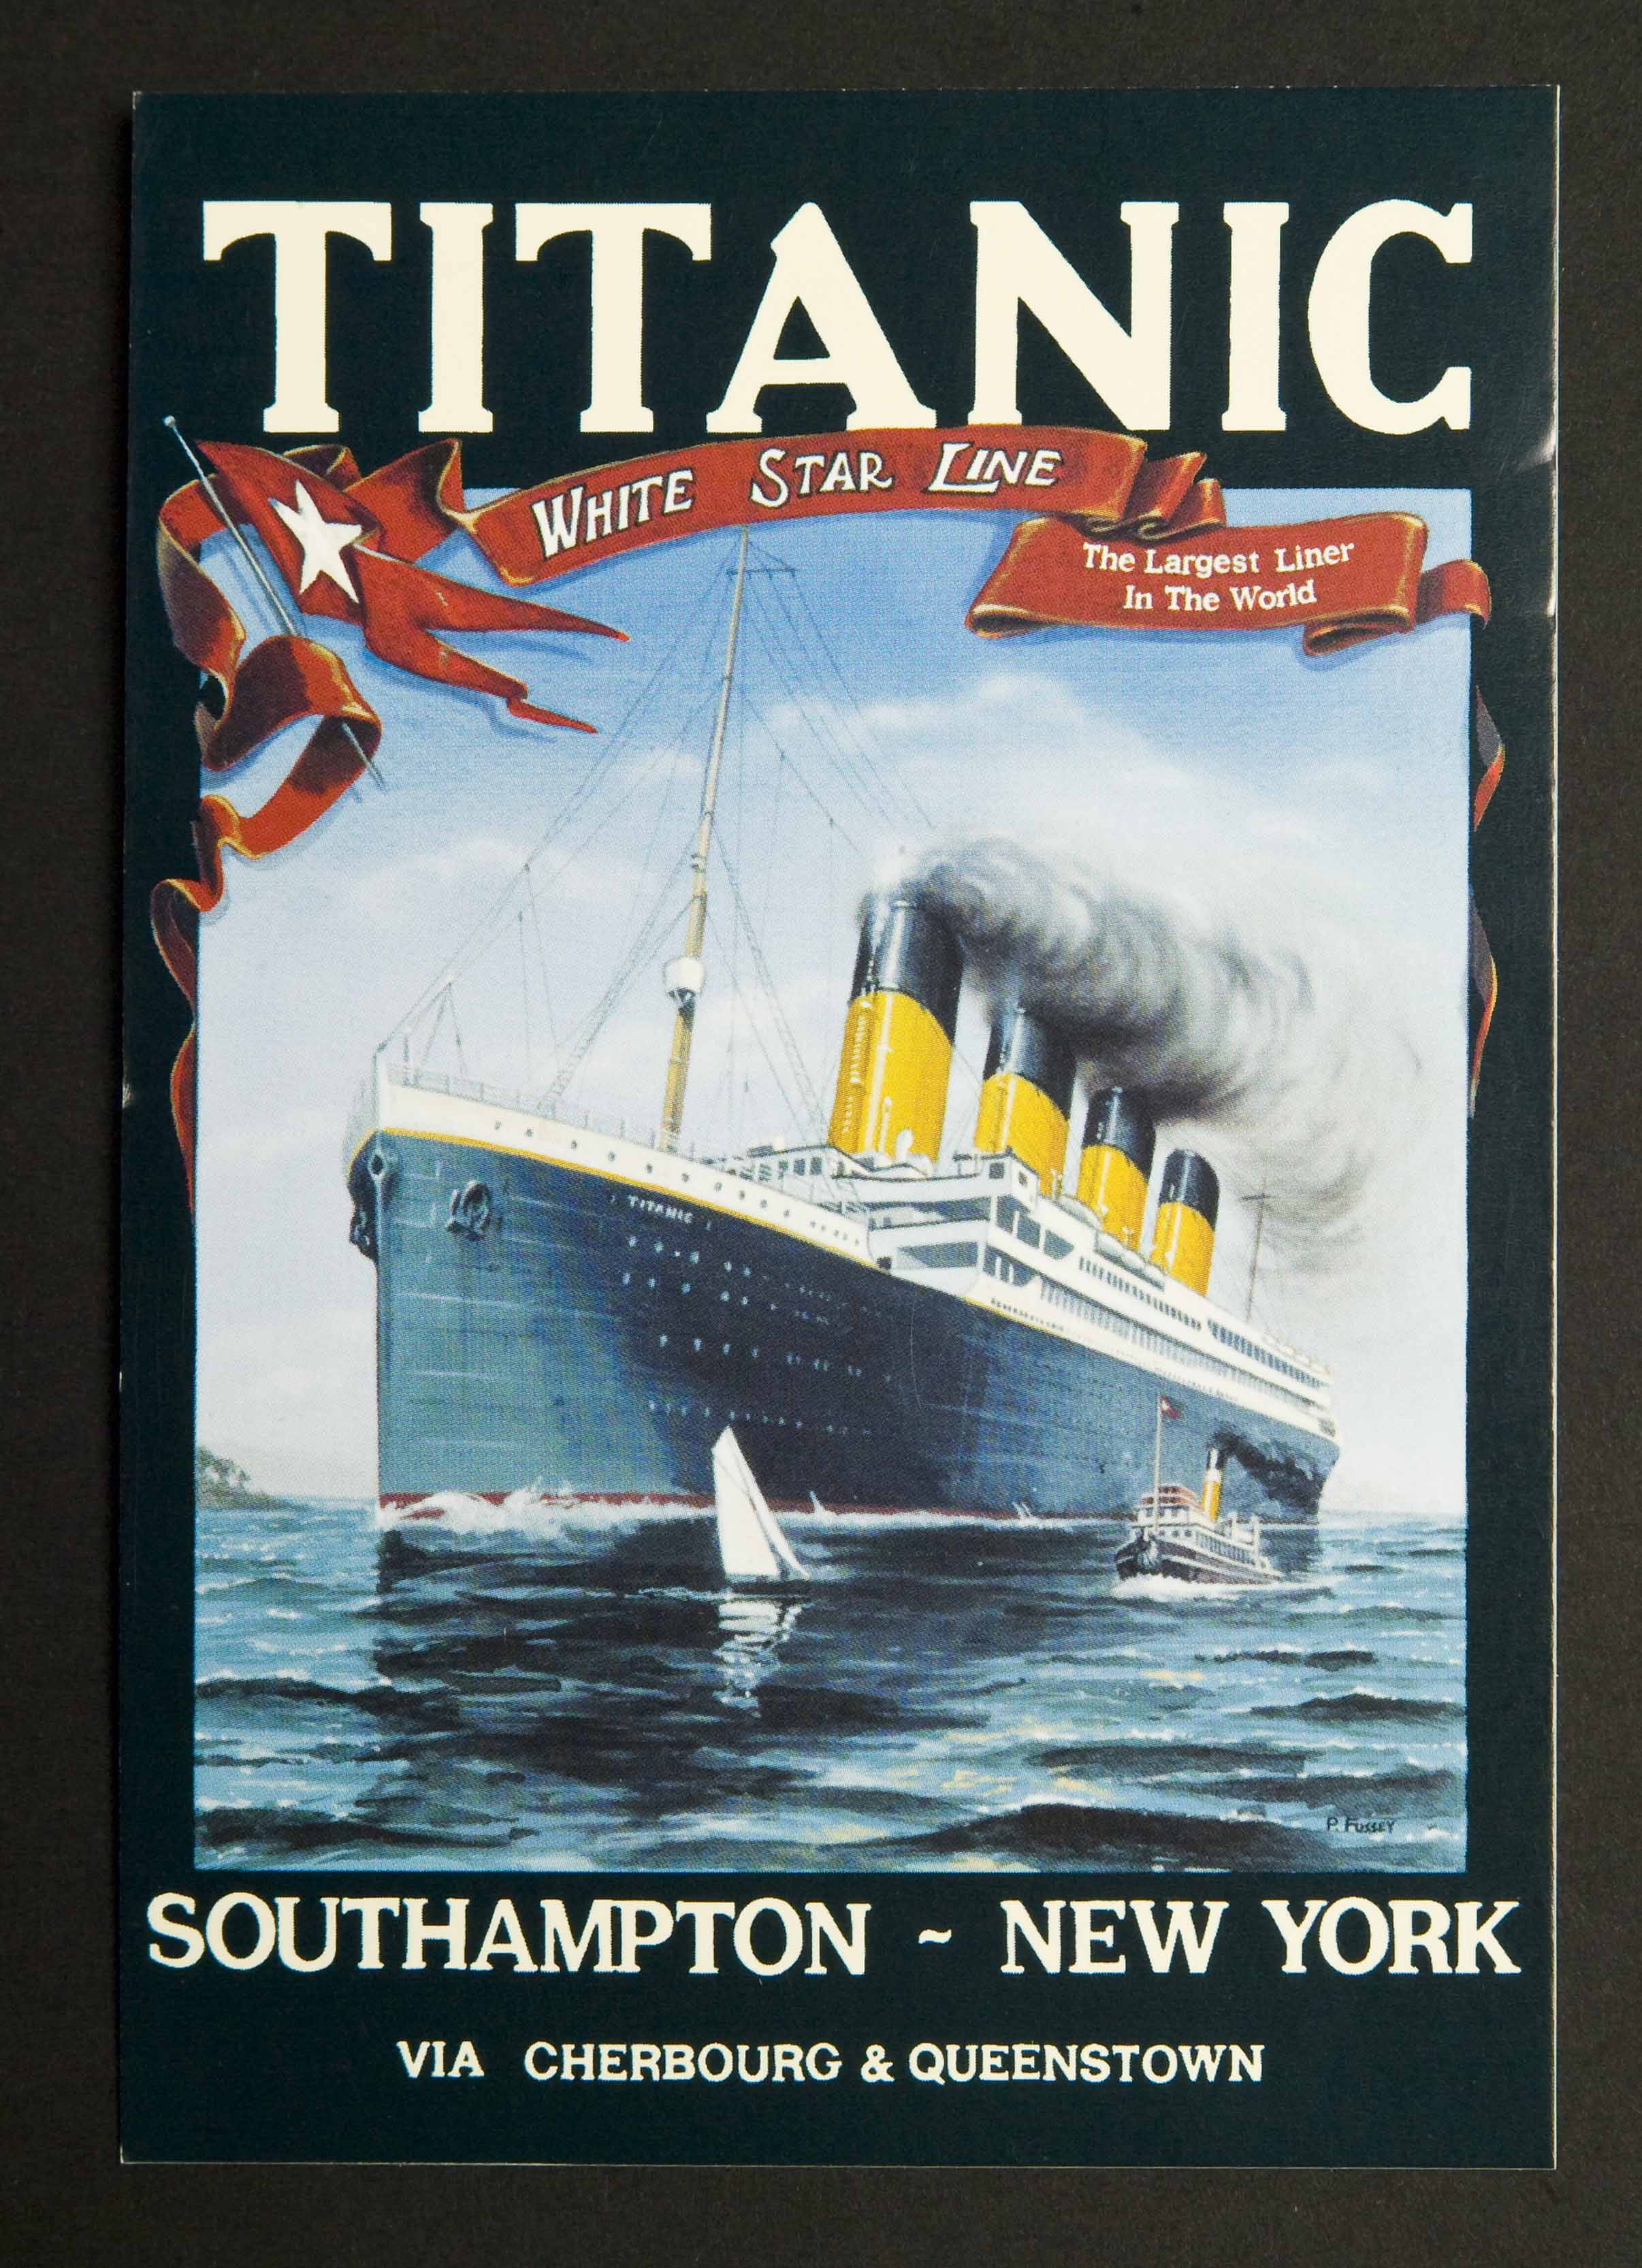 White Star Line Titanic A3 Poster - Click Image to Close